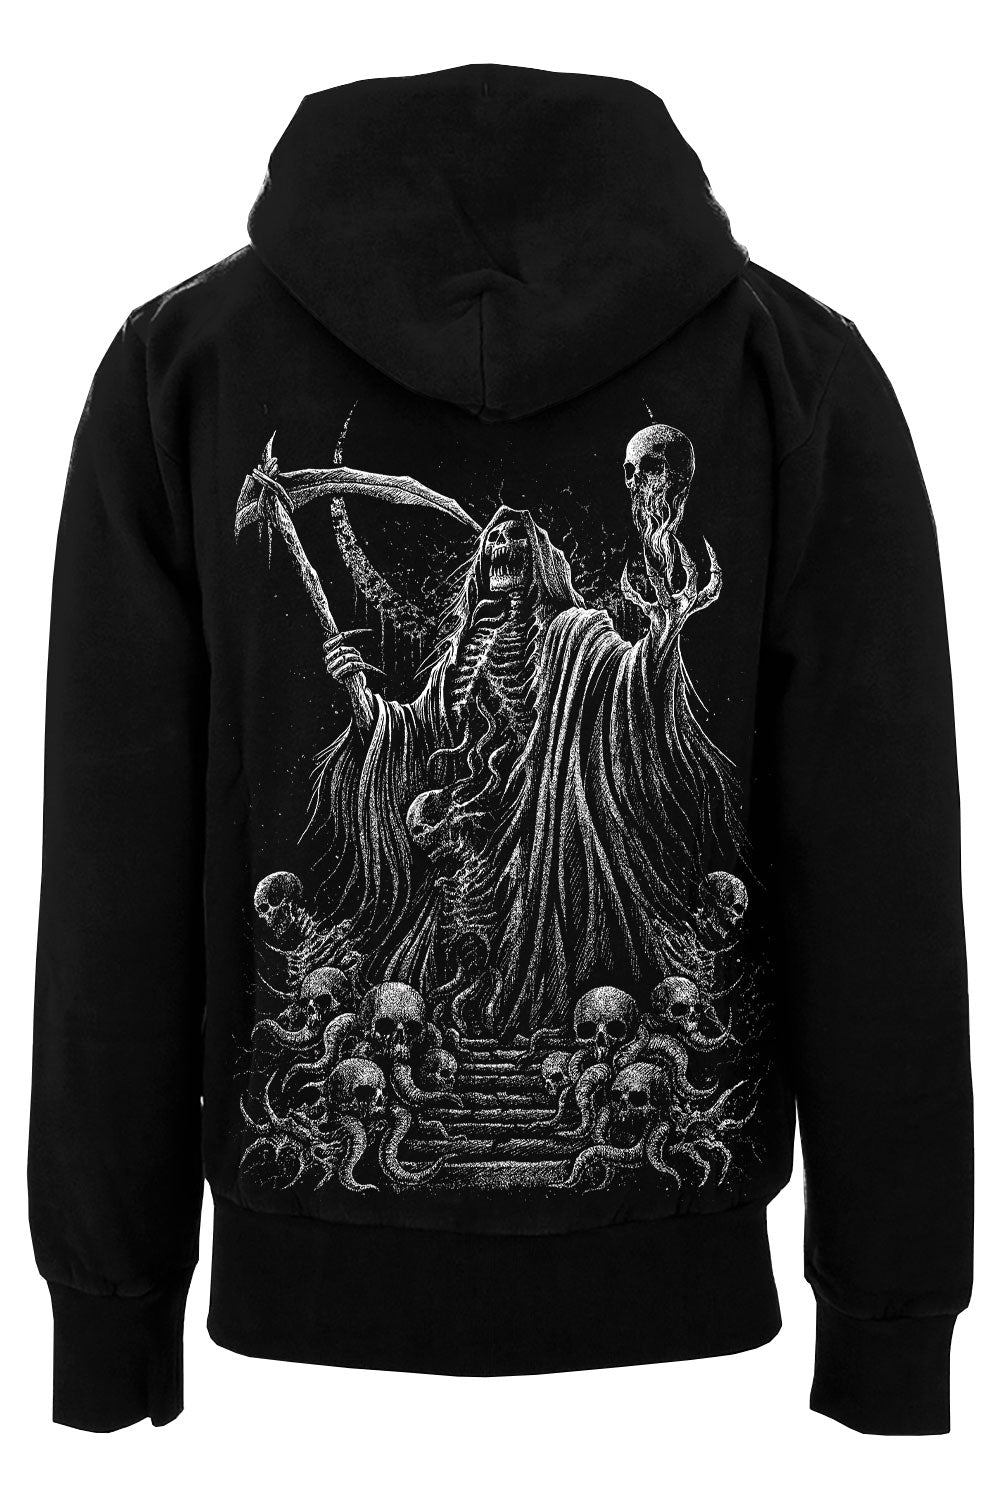 grim reaper gothic clothing